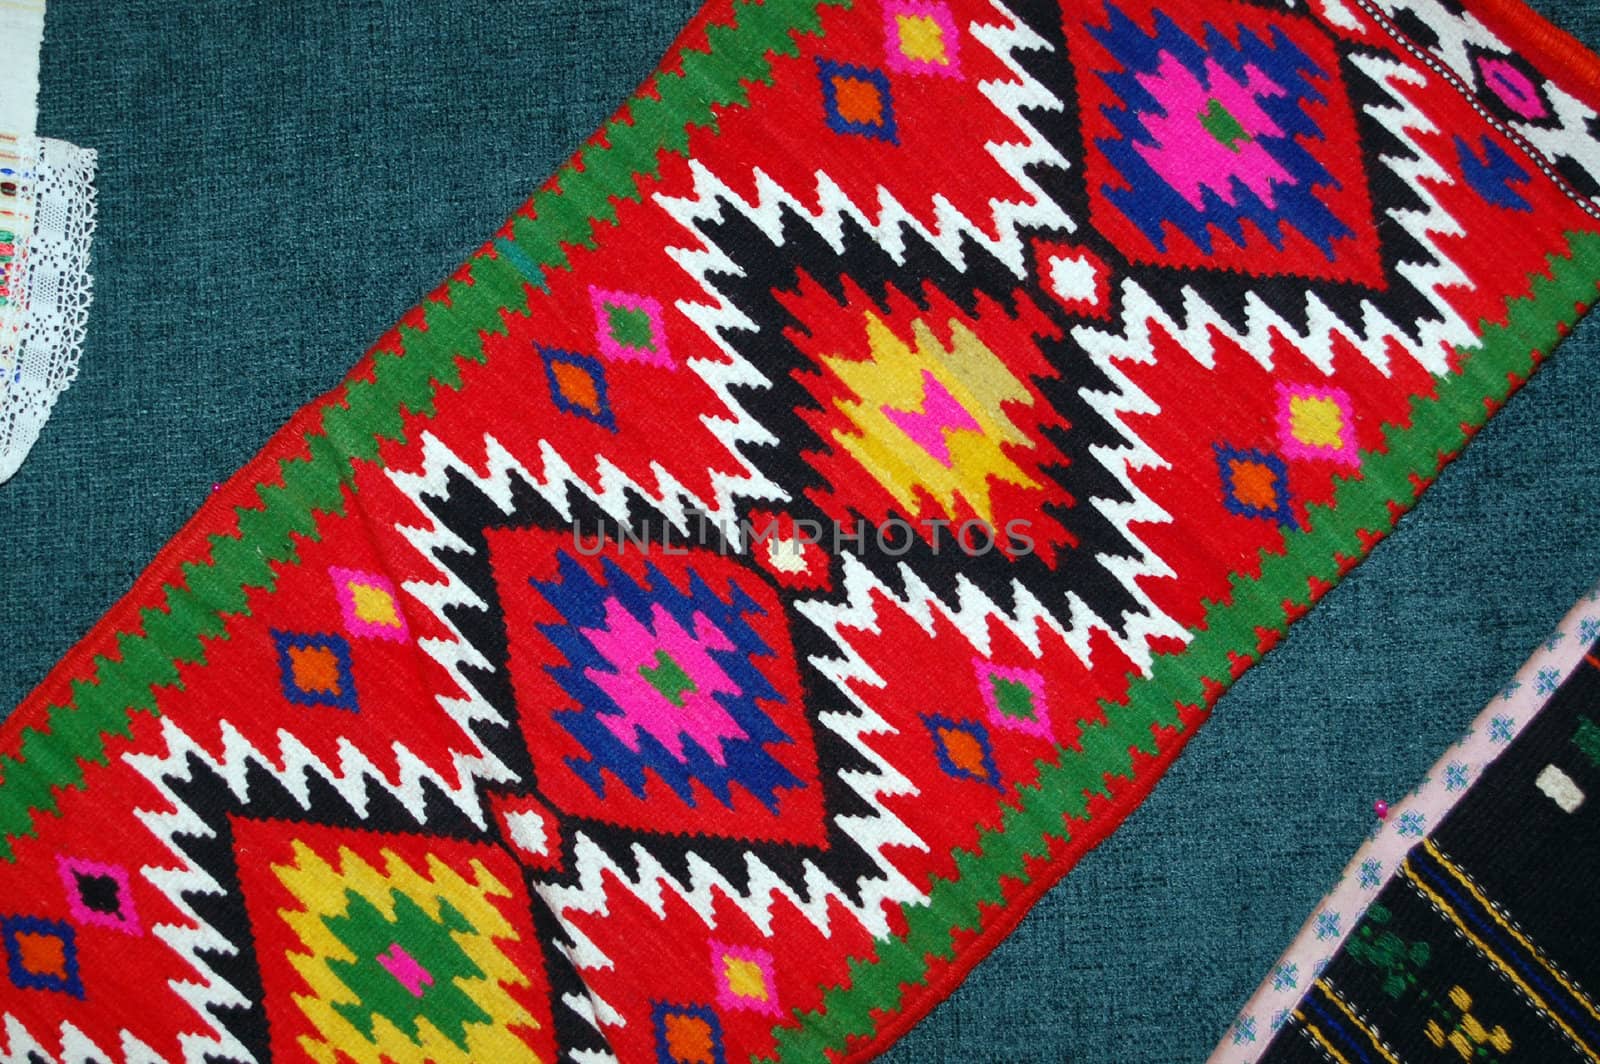 Traditional Macedonian Carpet Patterns by nehru